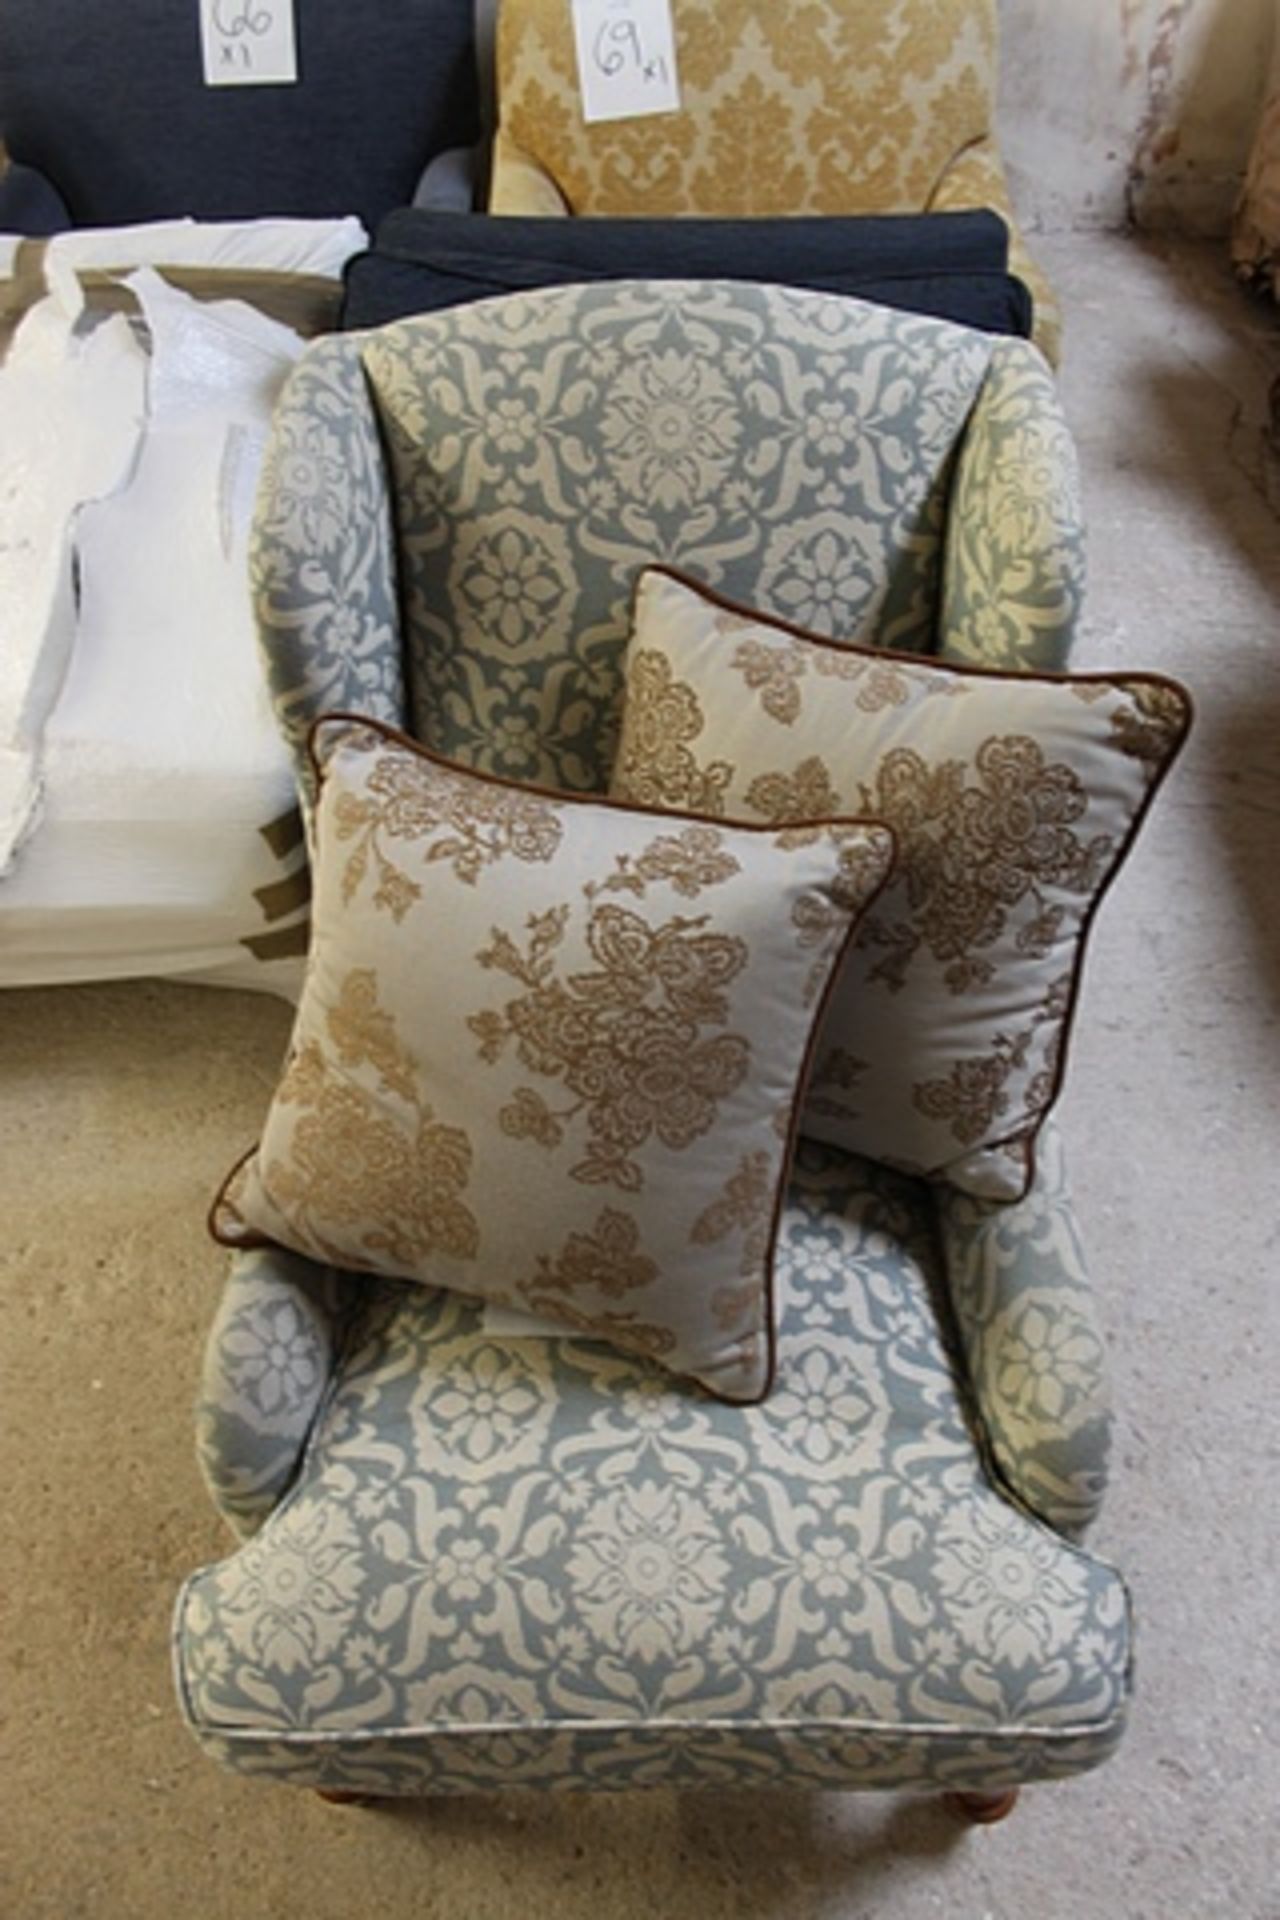 12 x 440mm x 440mm Josephine Home cushions gold pattern